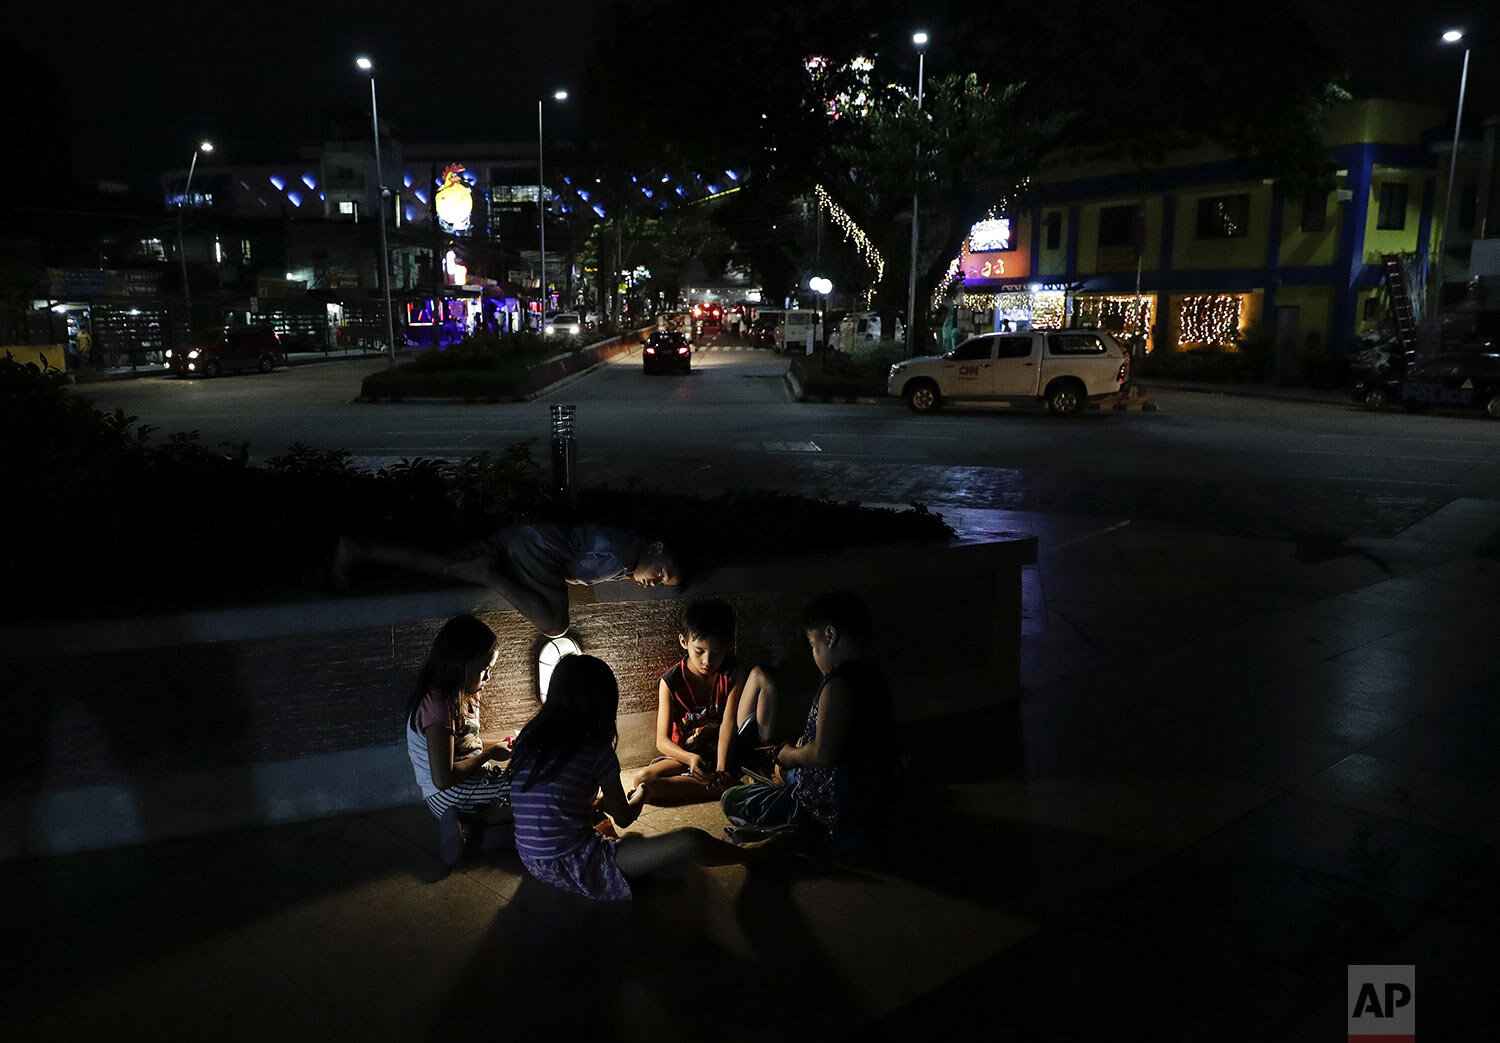  Children play beside a street lamp in Quezon city, Metro Manila, Philippines on Wednesday, Dec. 18, 2019. (AP Photo/Aaron Favila) 